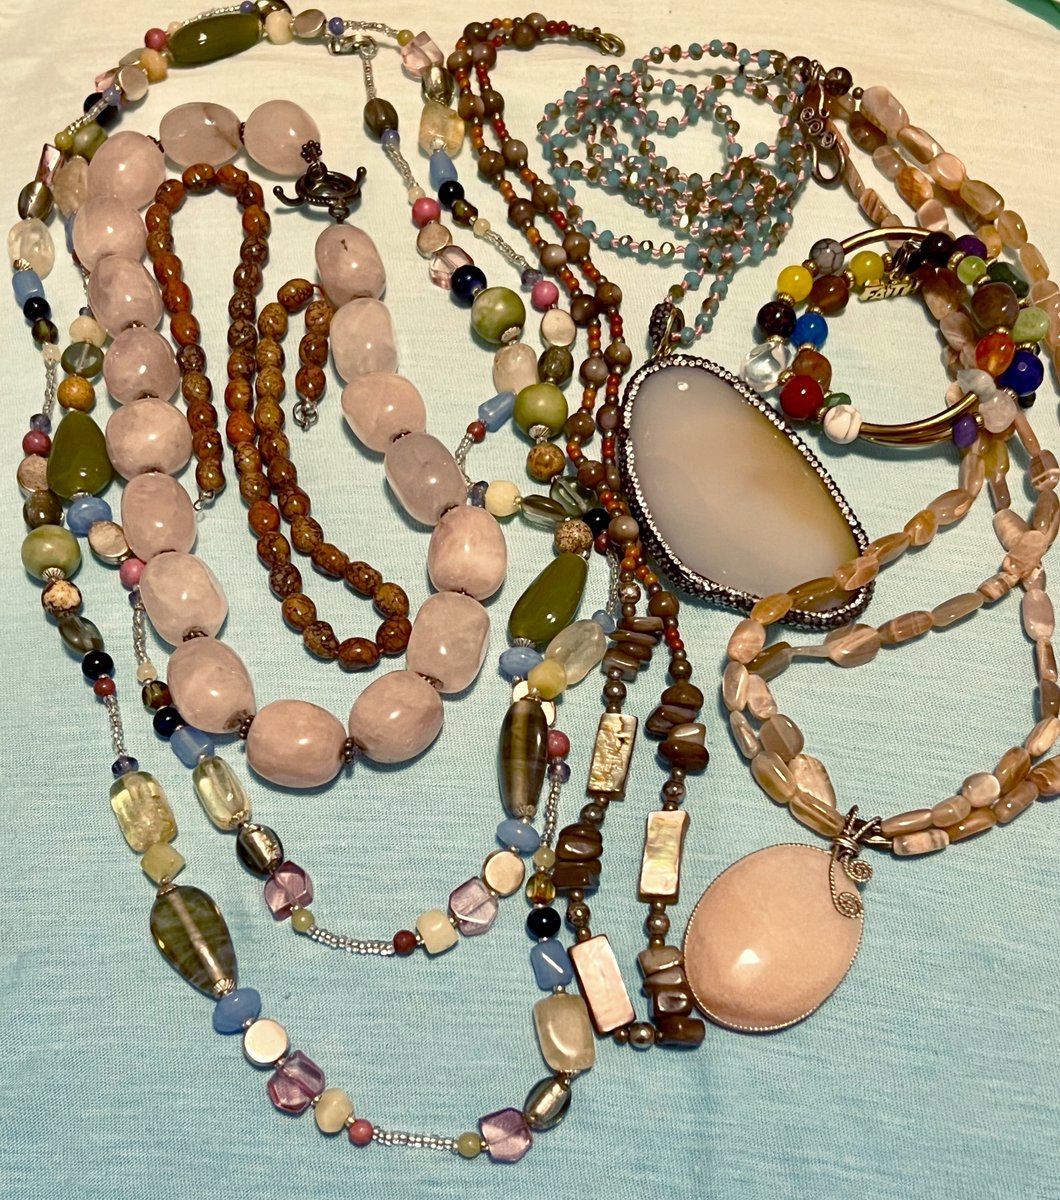 ASSORTED STONE #JewelryLot ~ 1+ LB #Agate #Quartz Shells Stones & Beads Wearable FREE SHIP

#jewelry #shells #gemstones #beads #wearable #ebayfinds #stonejewelry #stonejewelrylot #stonebeads #vintagejewelry #collectibles #funfashion #springfashion

 ebay.com/itm/2667890930…